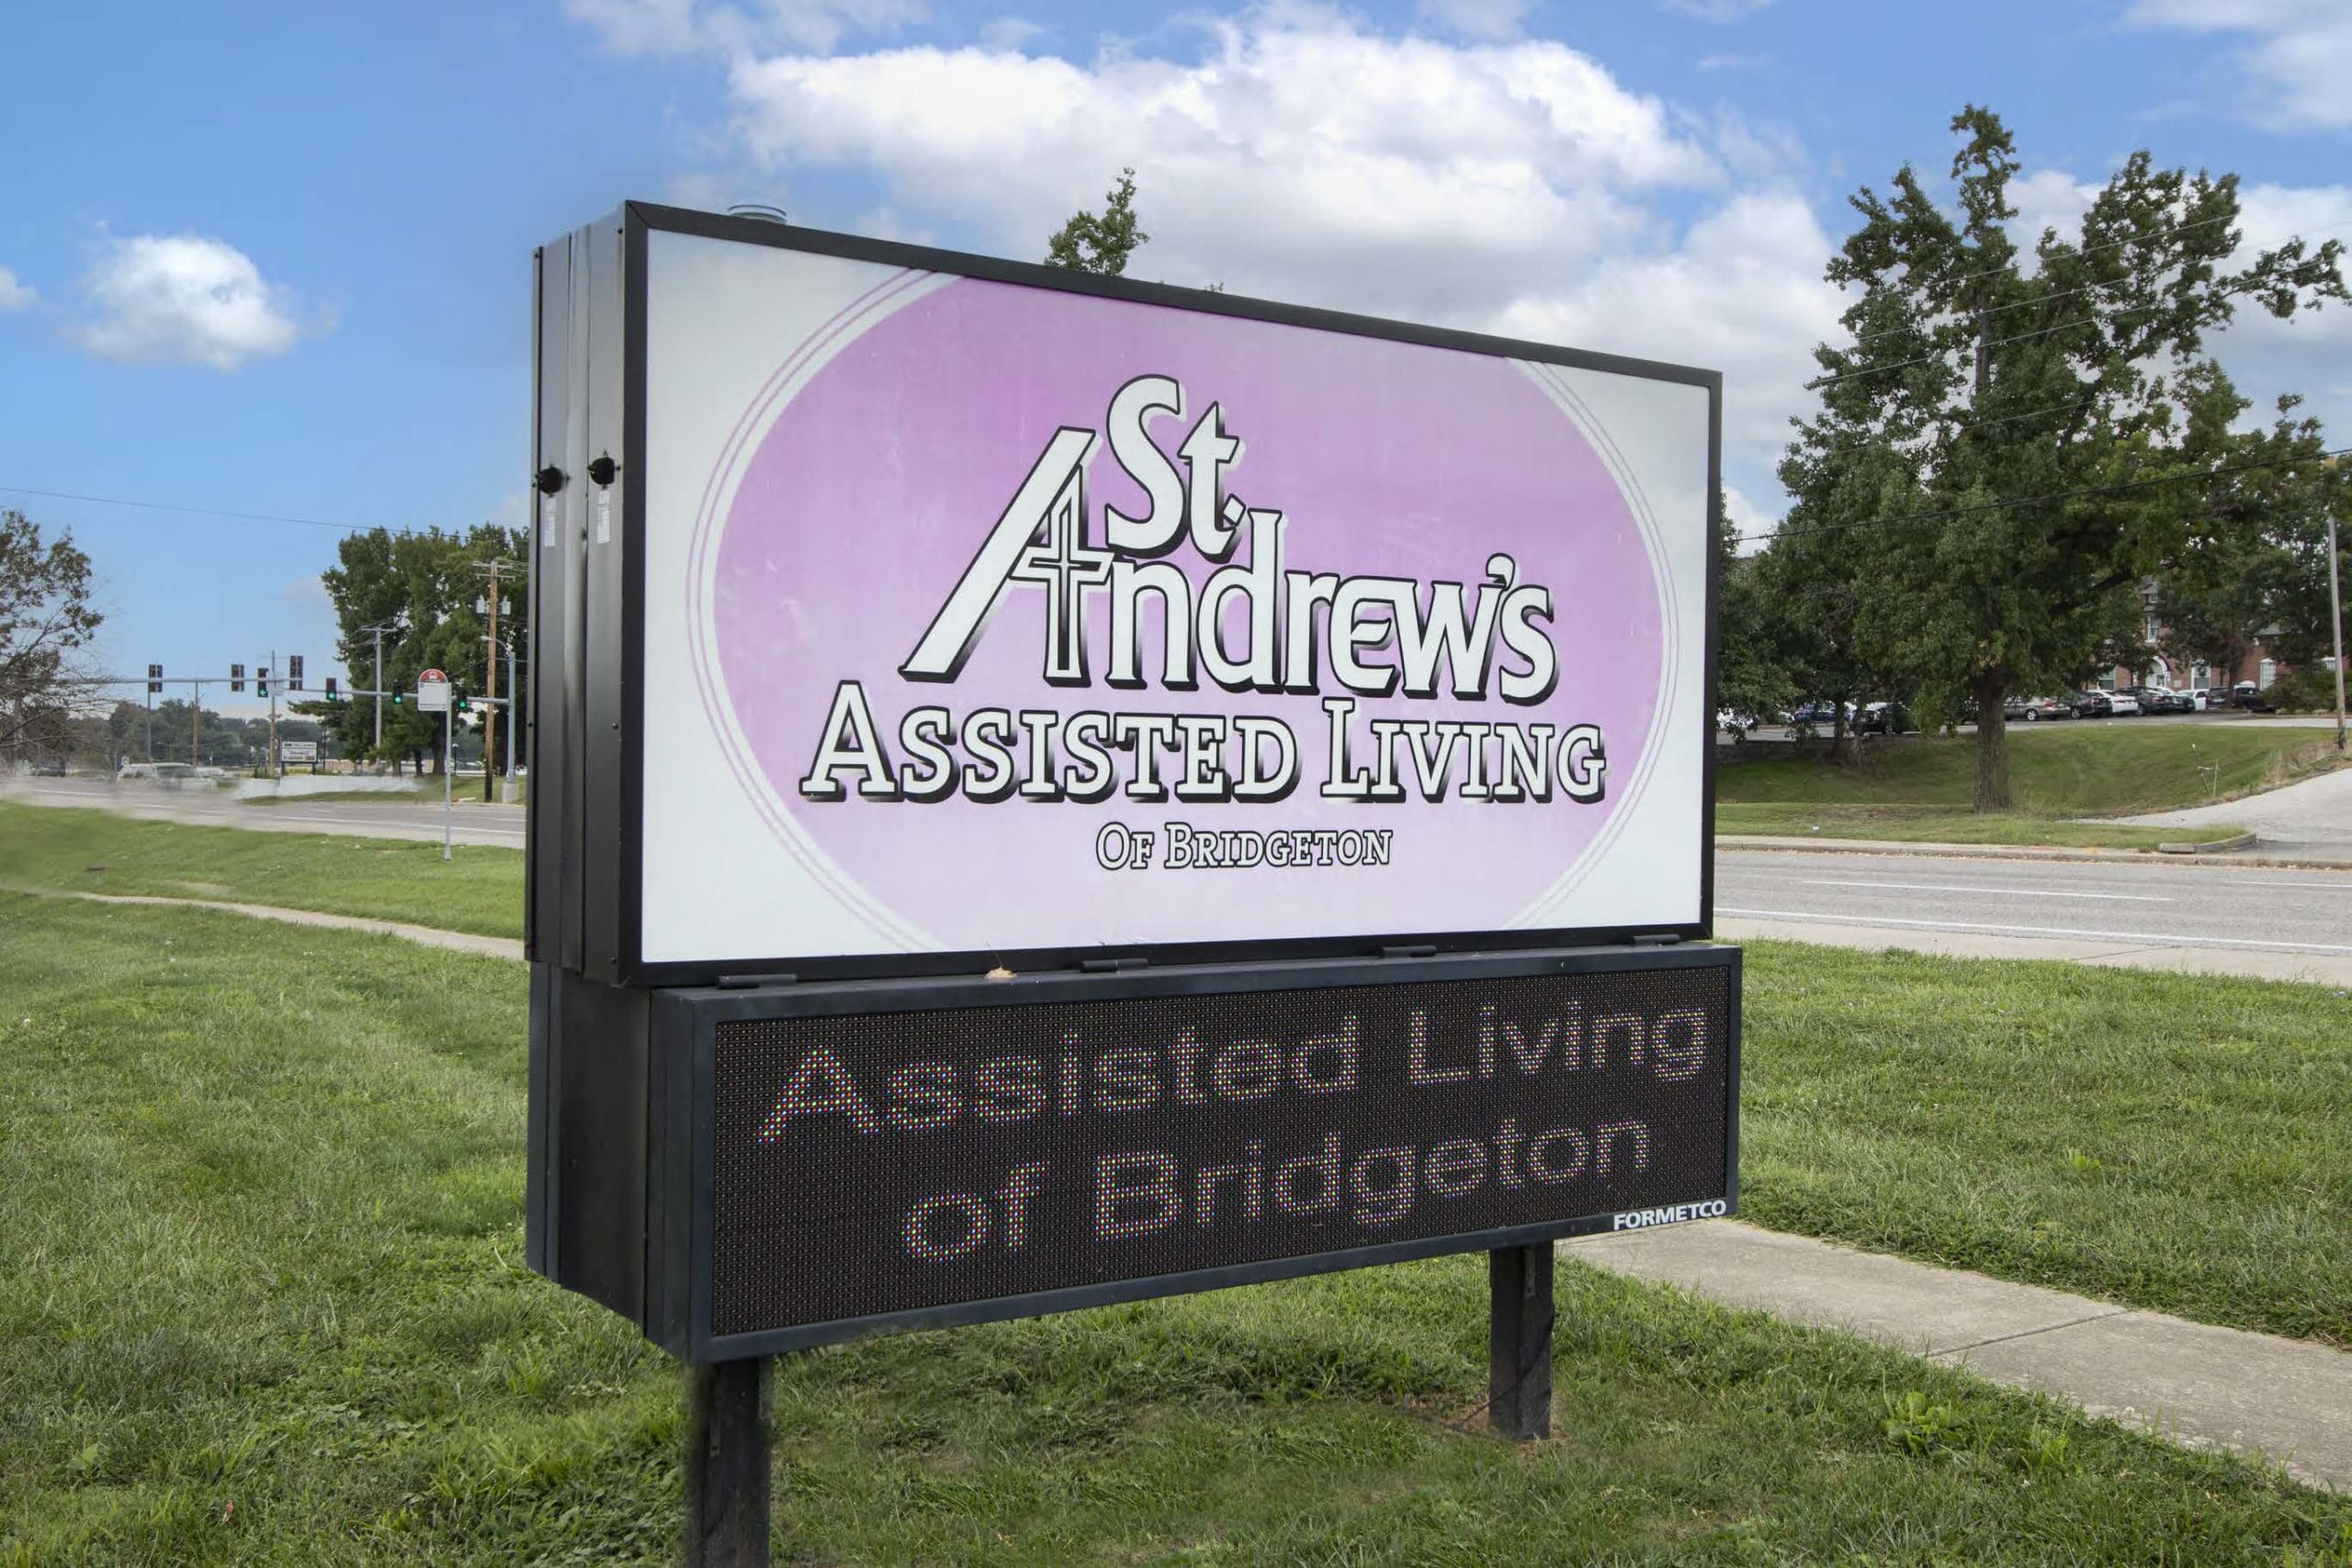 St. Andrew's Assisted Living of Bridgeton